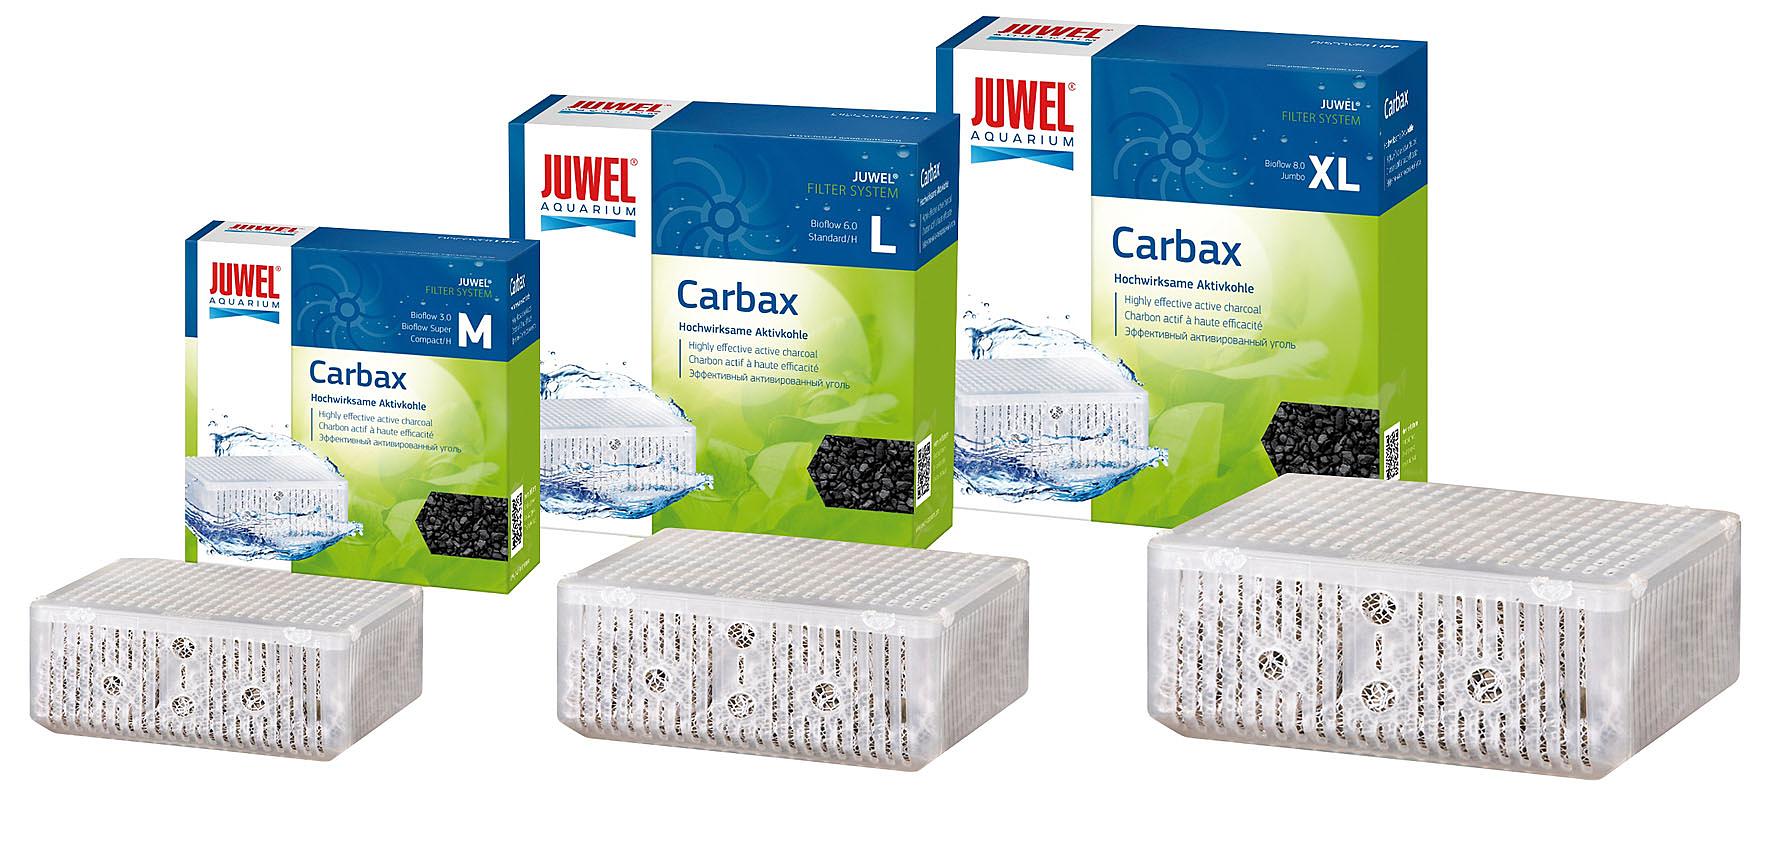 Juwel Carbax materiau de filtration